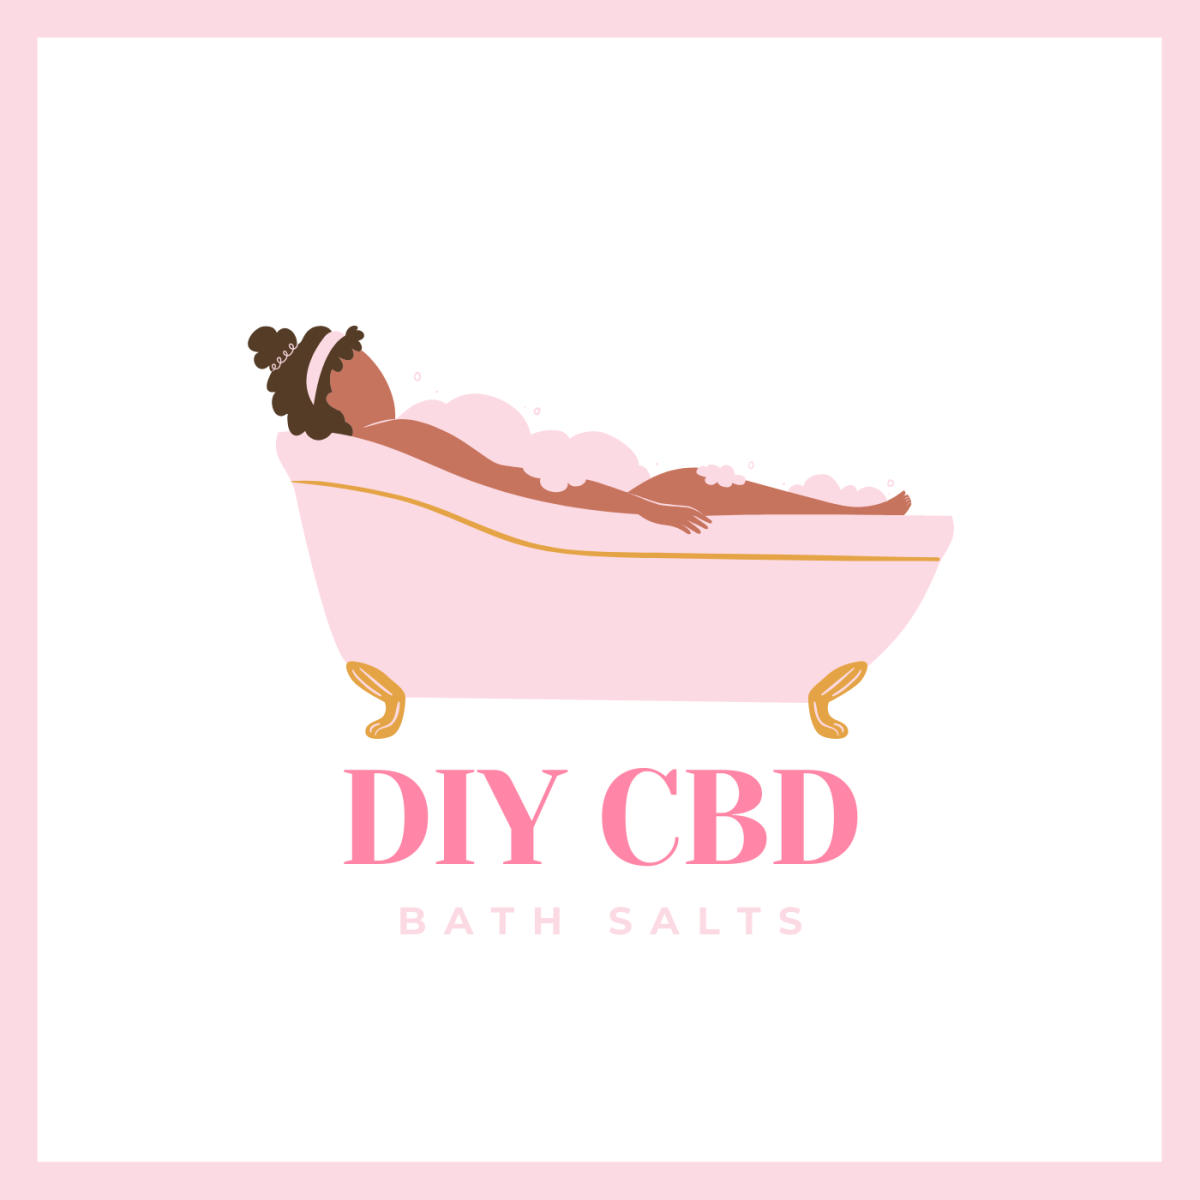 DIY CBD Bath Salts You Can Make at Home